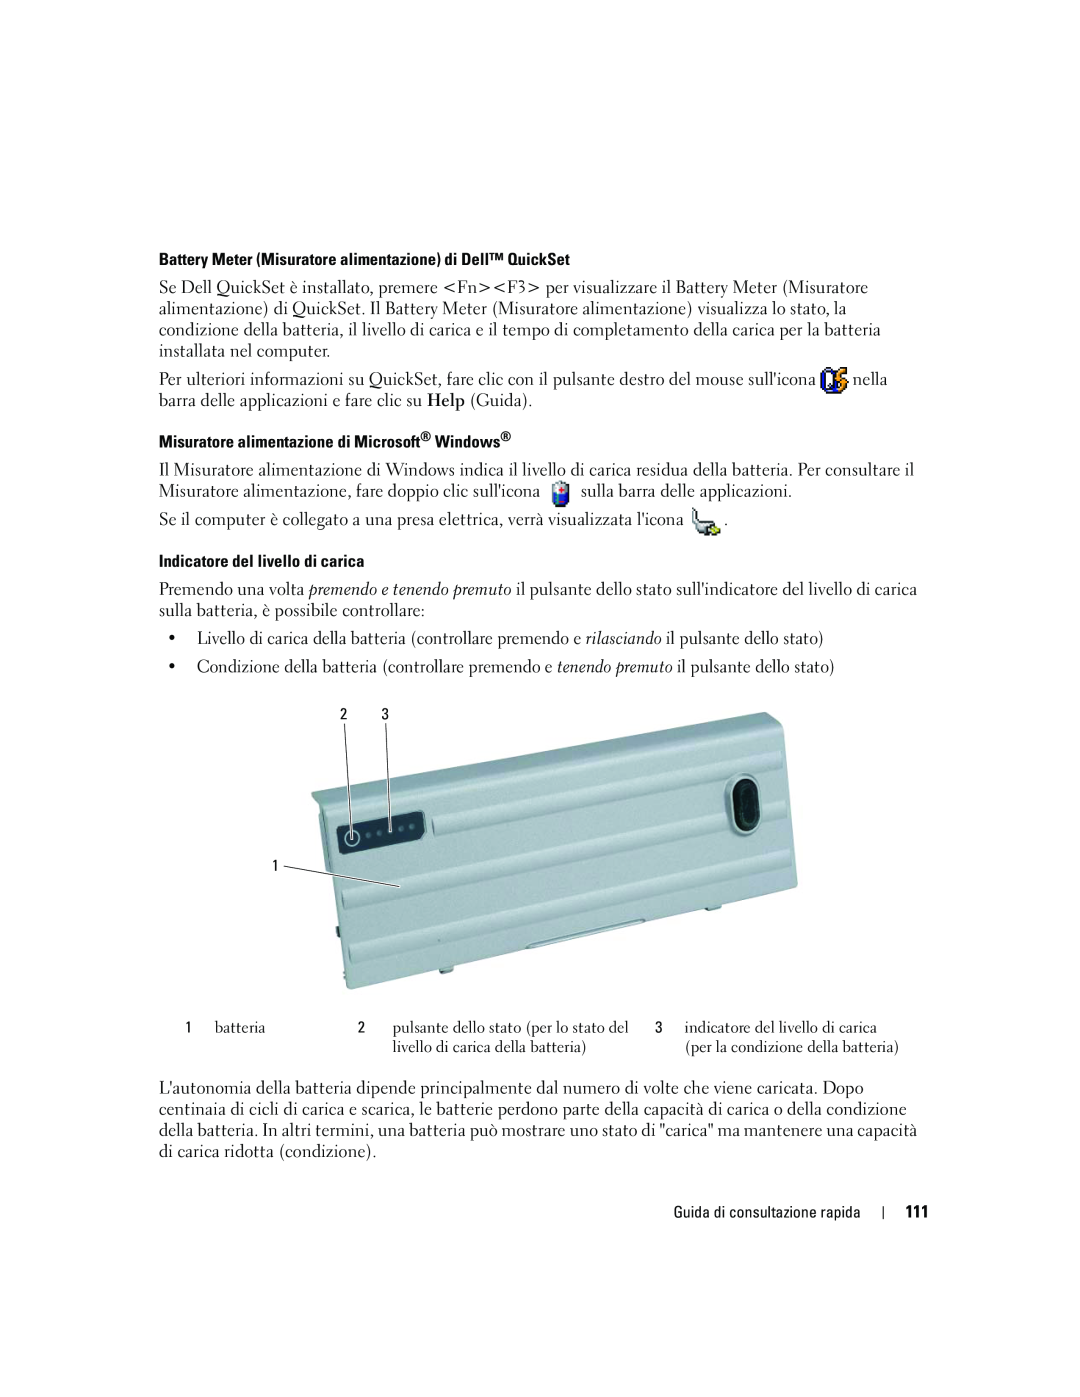 Dell ATG D620 manual Battery Meter Misuratore alimentazione di Dell QuickSet, Misuratore alimentazione di Microsoft Windows 